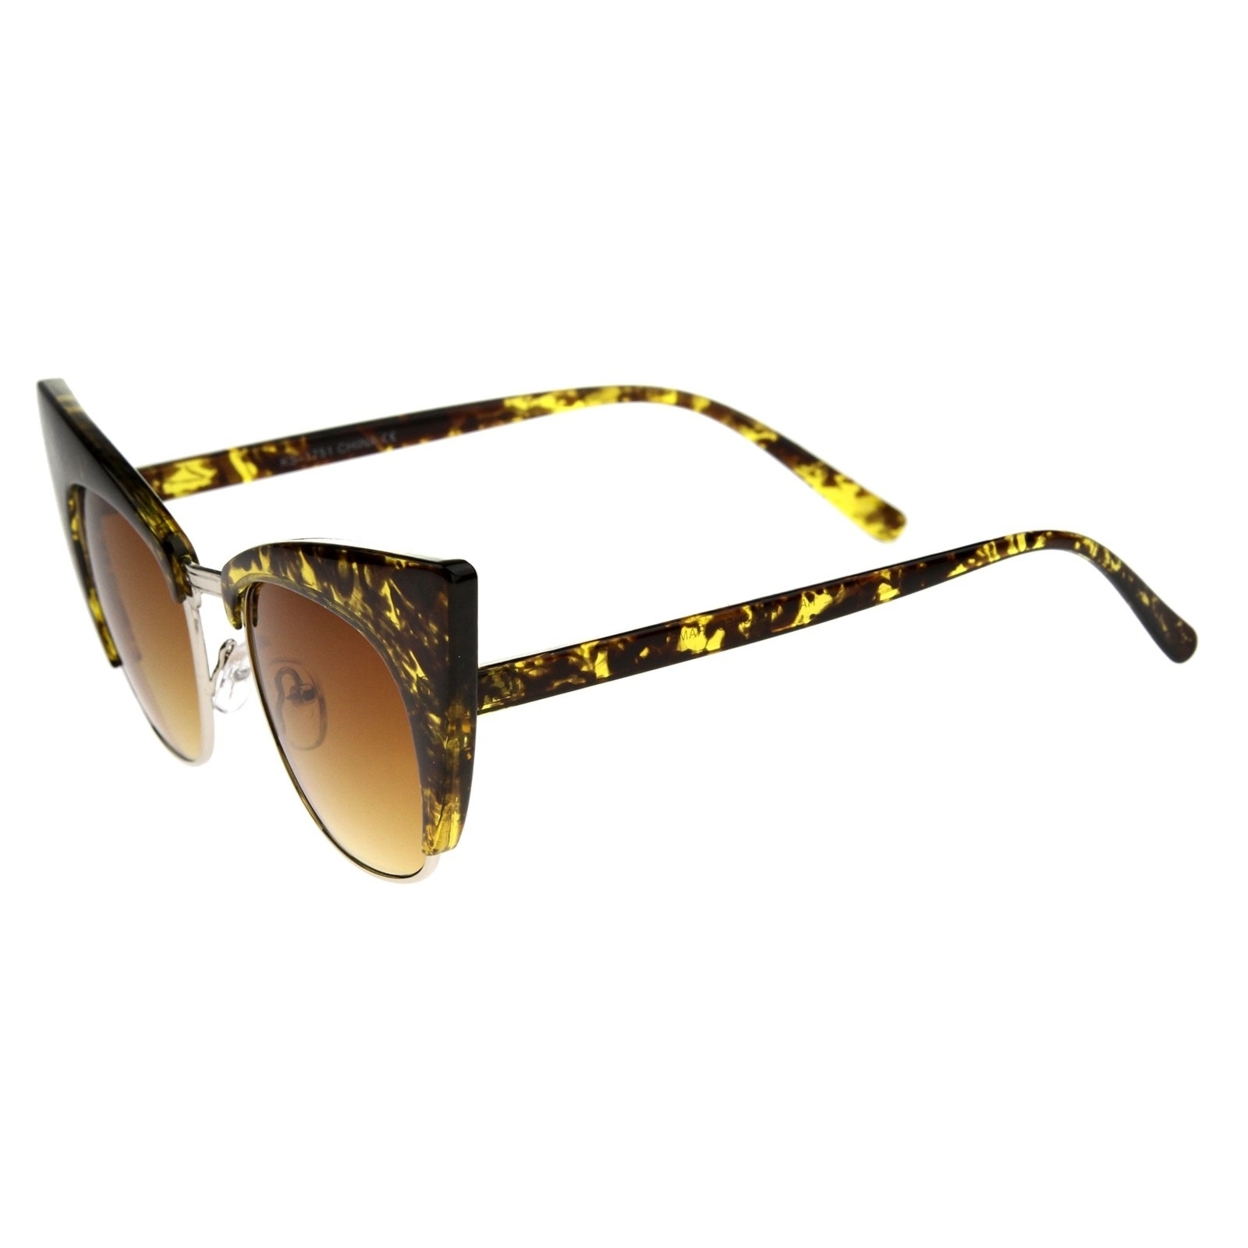 Women's High Fashion Half Frame Bold Square Cat Eye Sunglasses 50mm - Orange-Tortoise / Amber